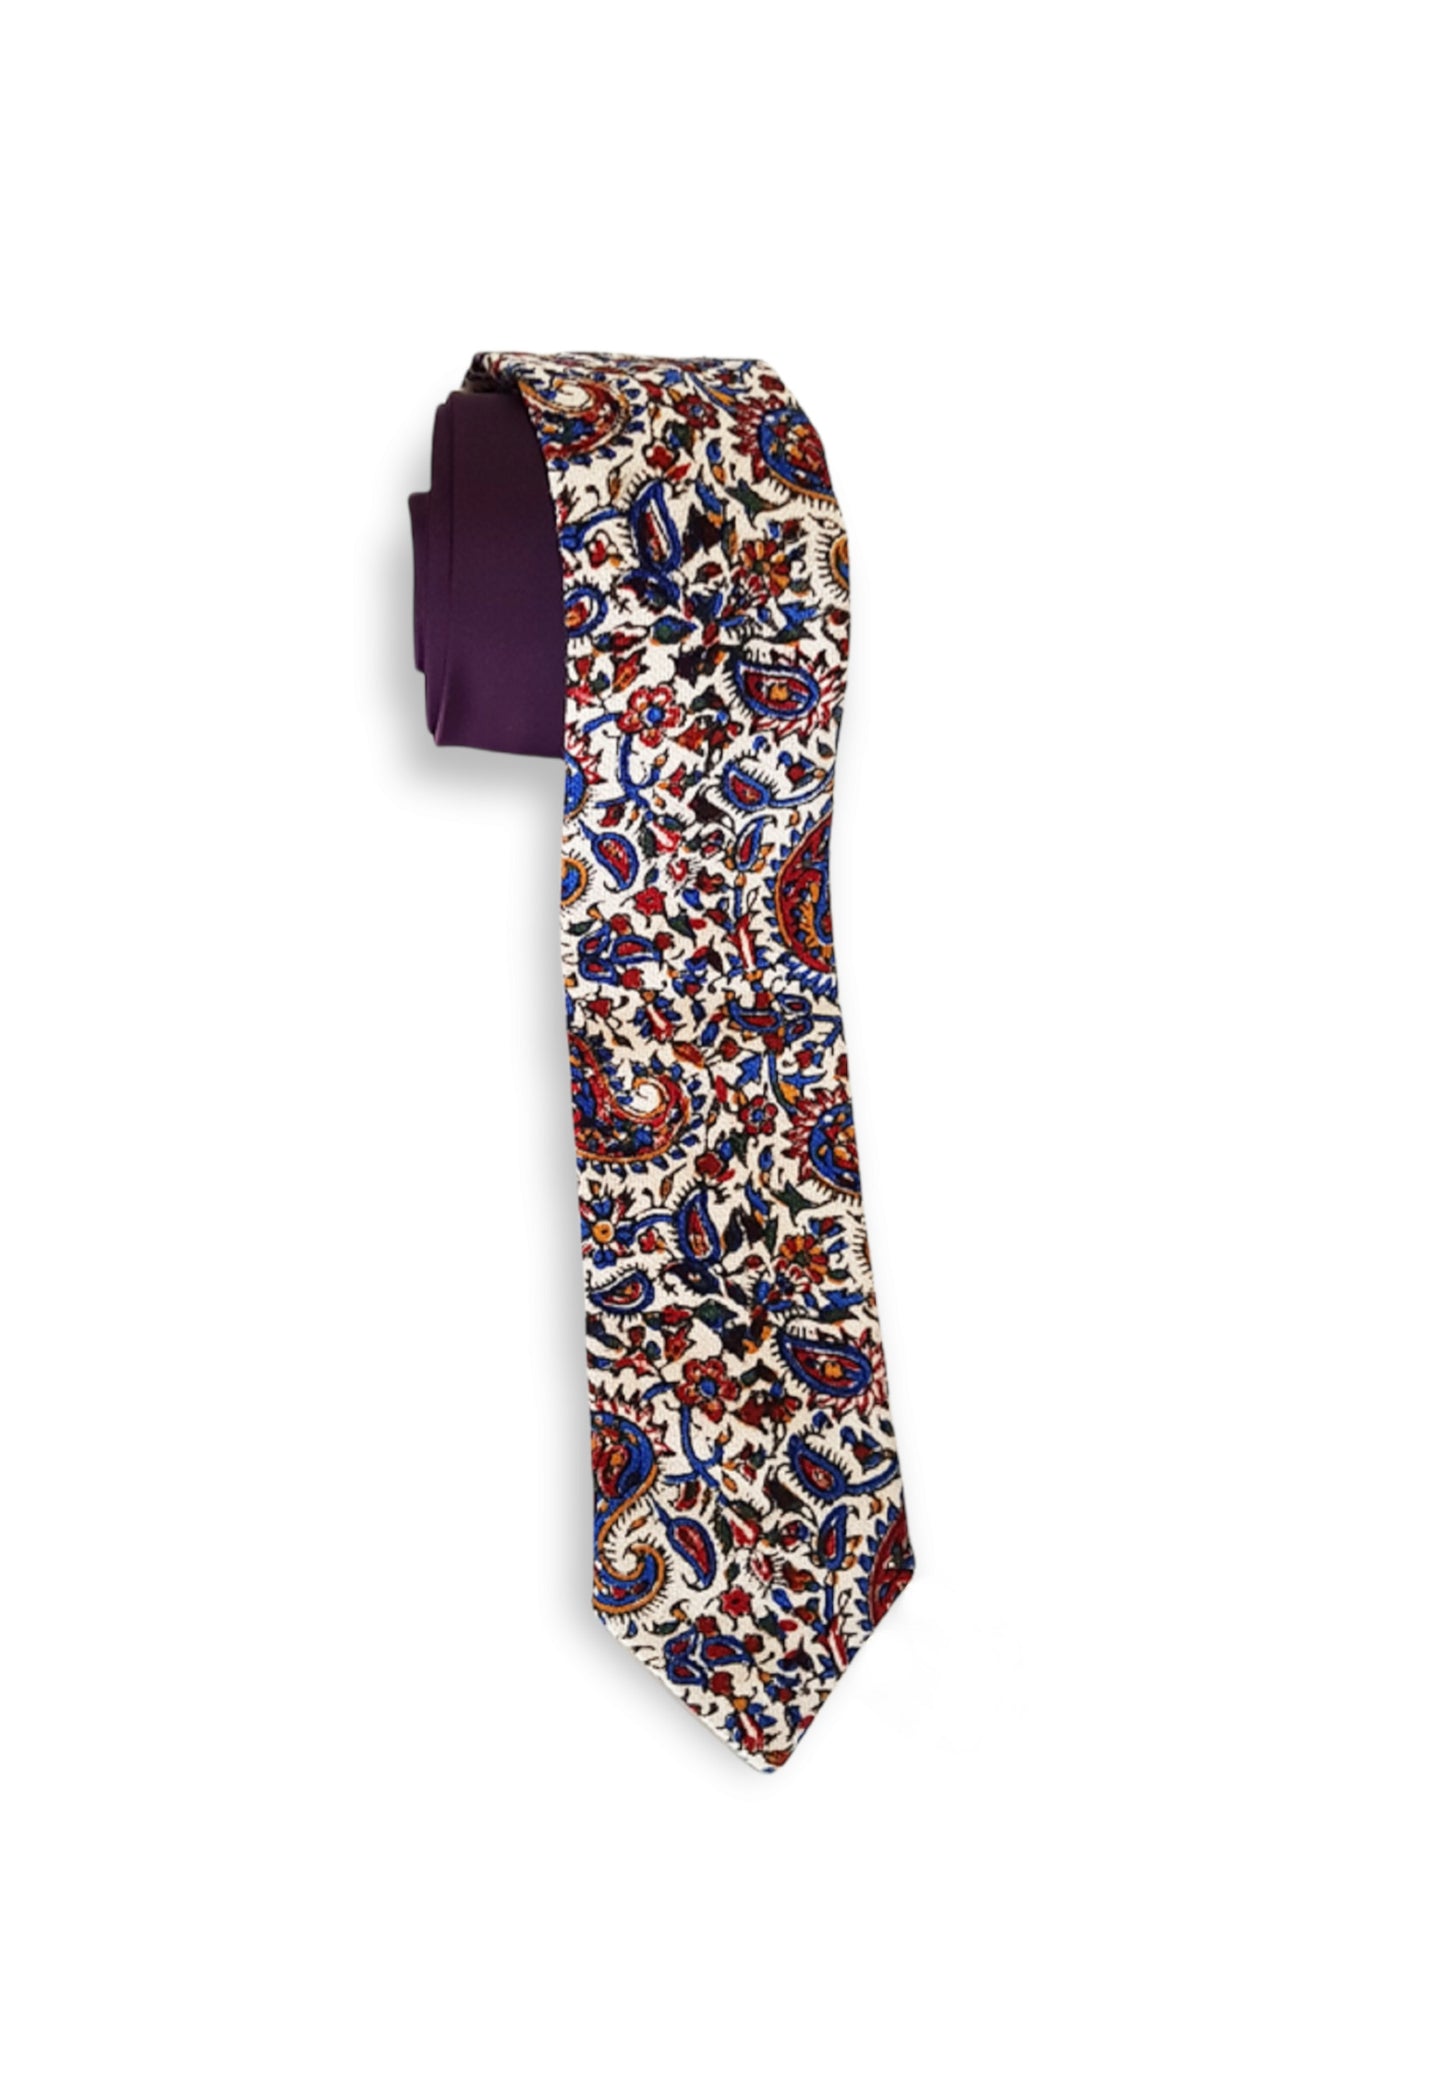 AFROZAN - Artisan Hand-printed Necktie -BV